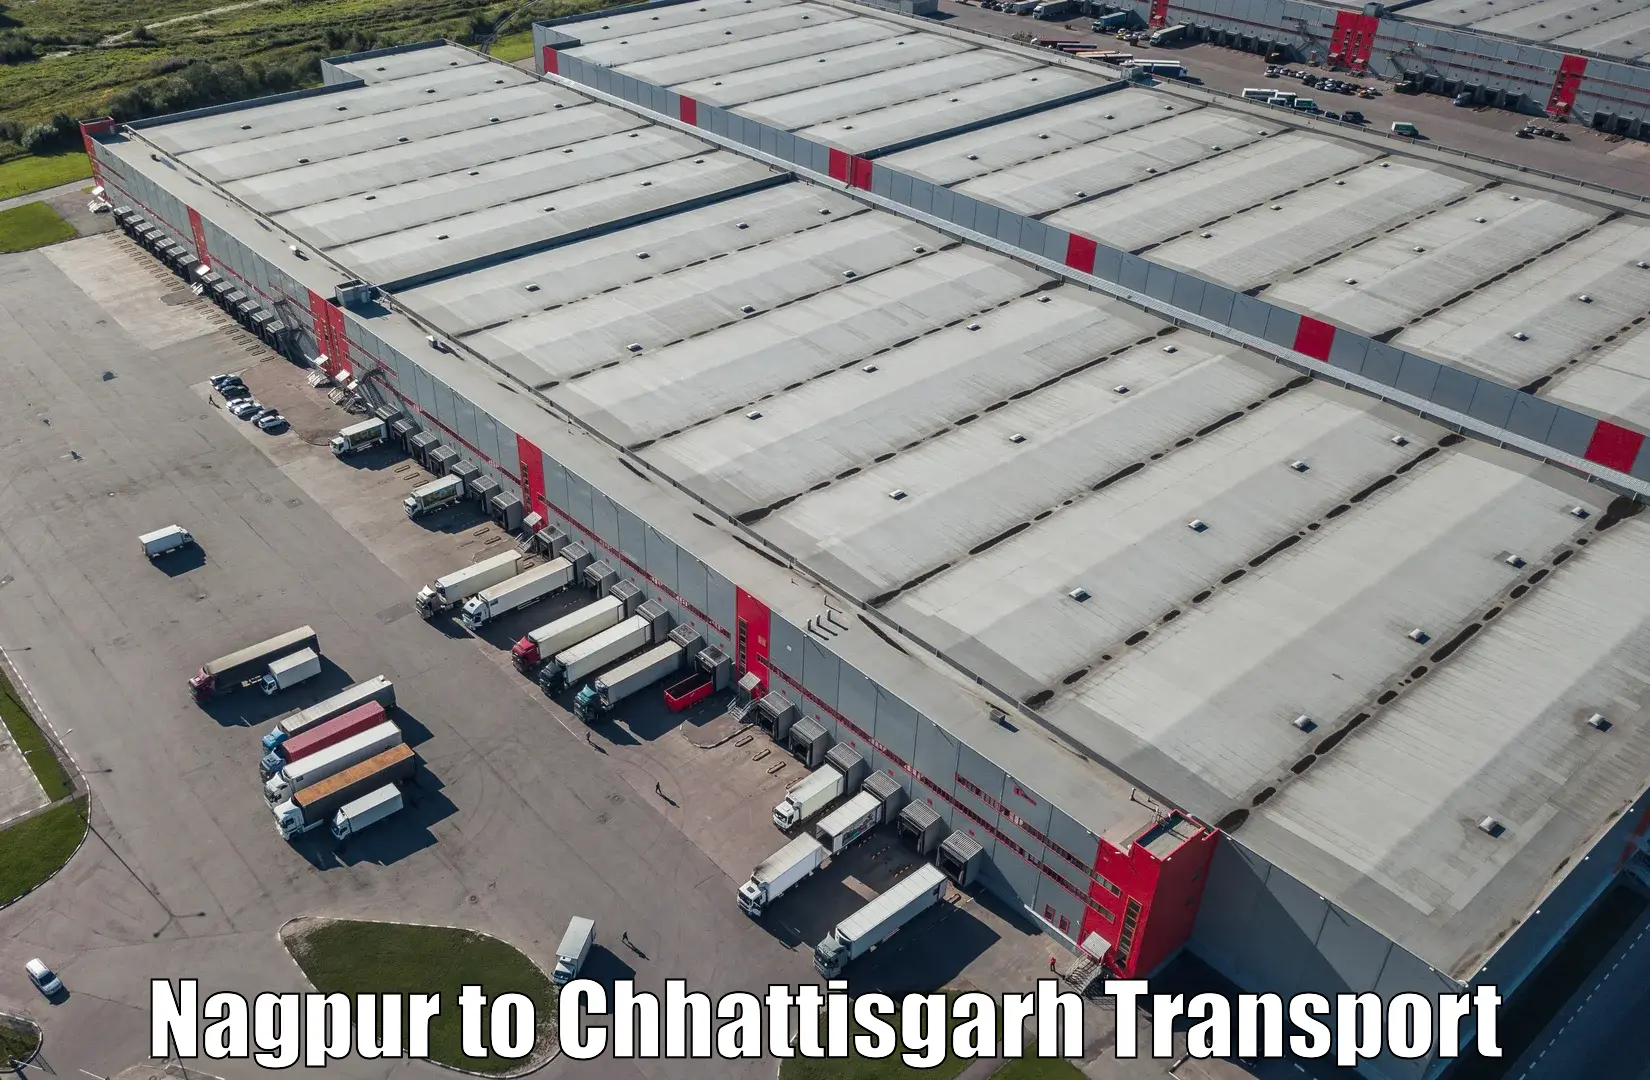 Goods delivery service Nagpur to Patna Chhattisgarh